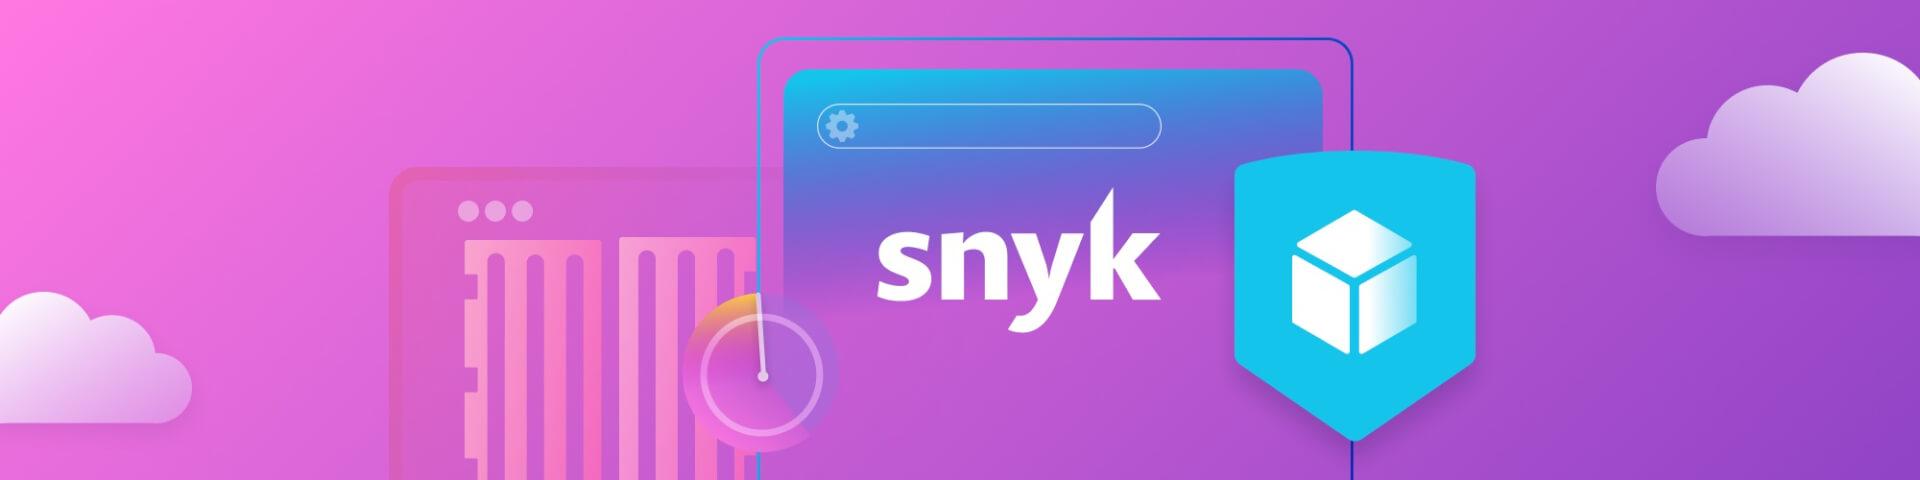 wordpress-sync/blog-hero-snyk-container-purple